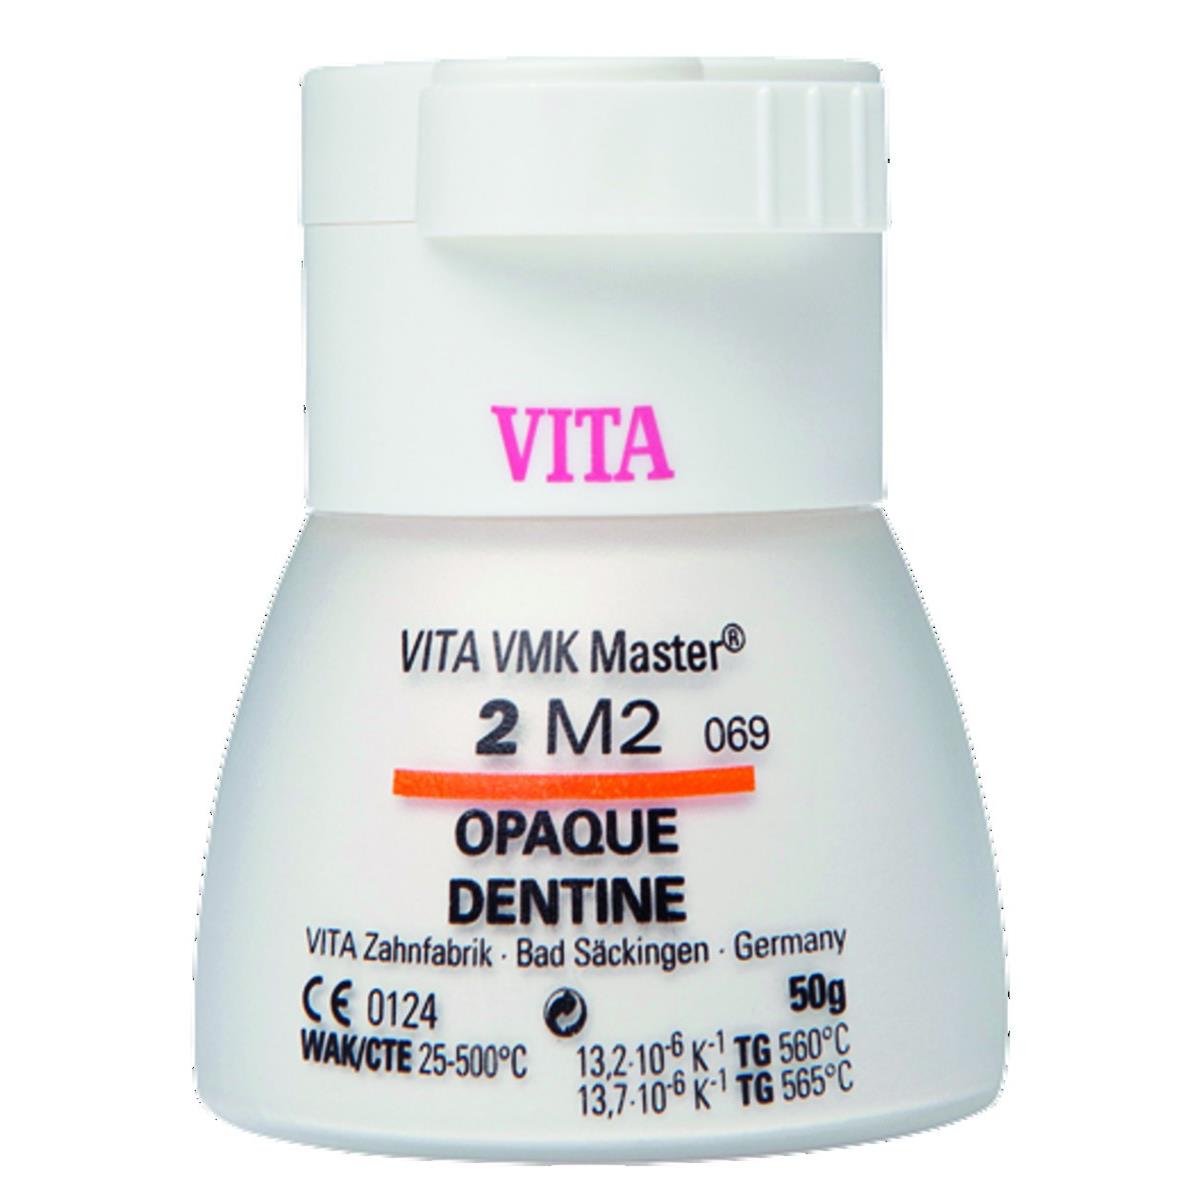 VMK Master VITA - Dentine Opaque - 5M2 - Le flacon de 50 g